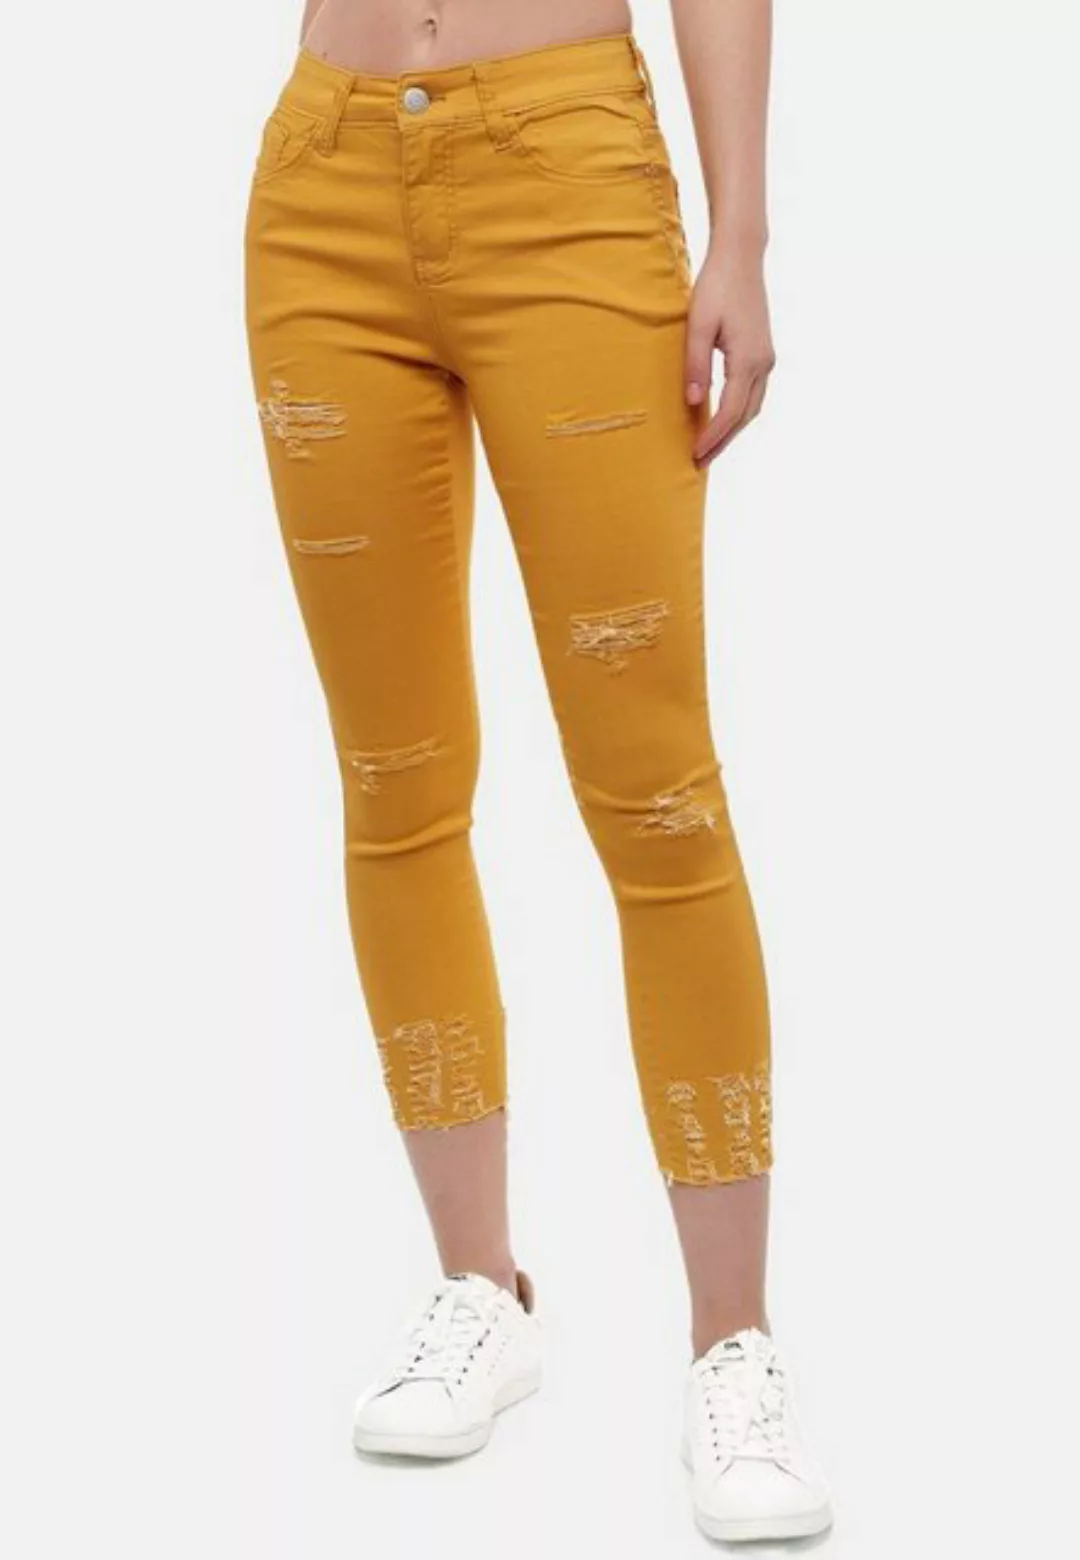 MiSS RJ Skinny-fit-Jeans Denim Jeans Hose Stretch Röhrenjeans Skinny Treggi günstig online kaufen